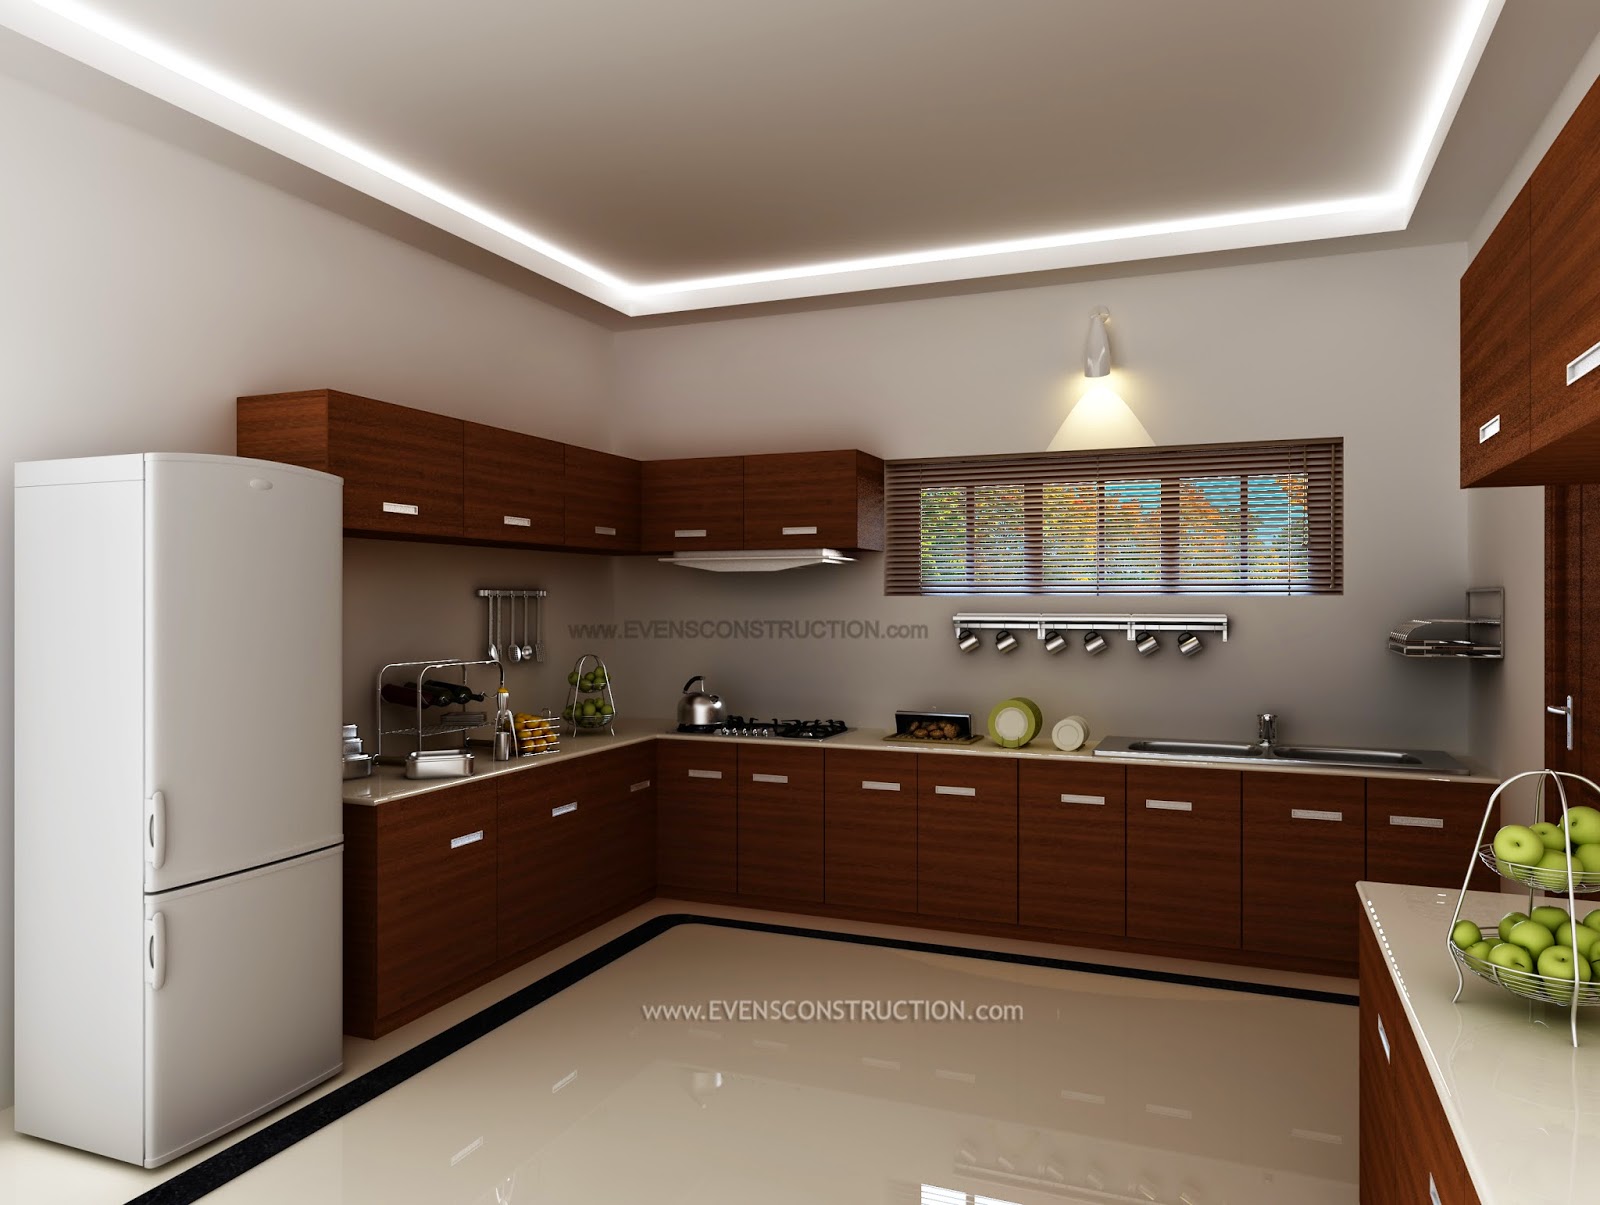 Evens Construction Pvt Ltd Kerala kitchen interior